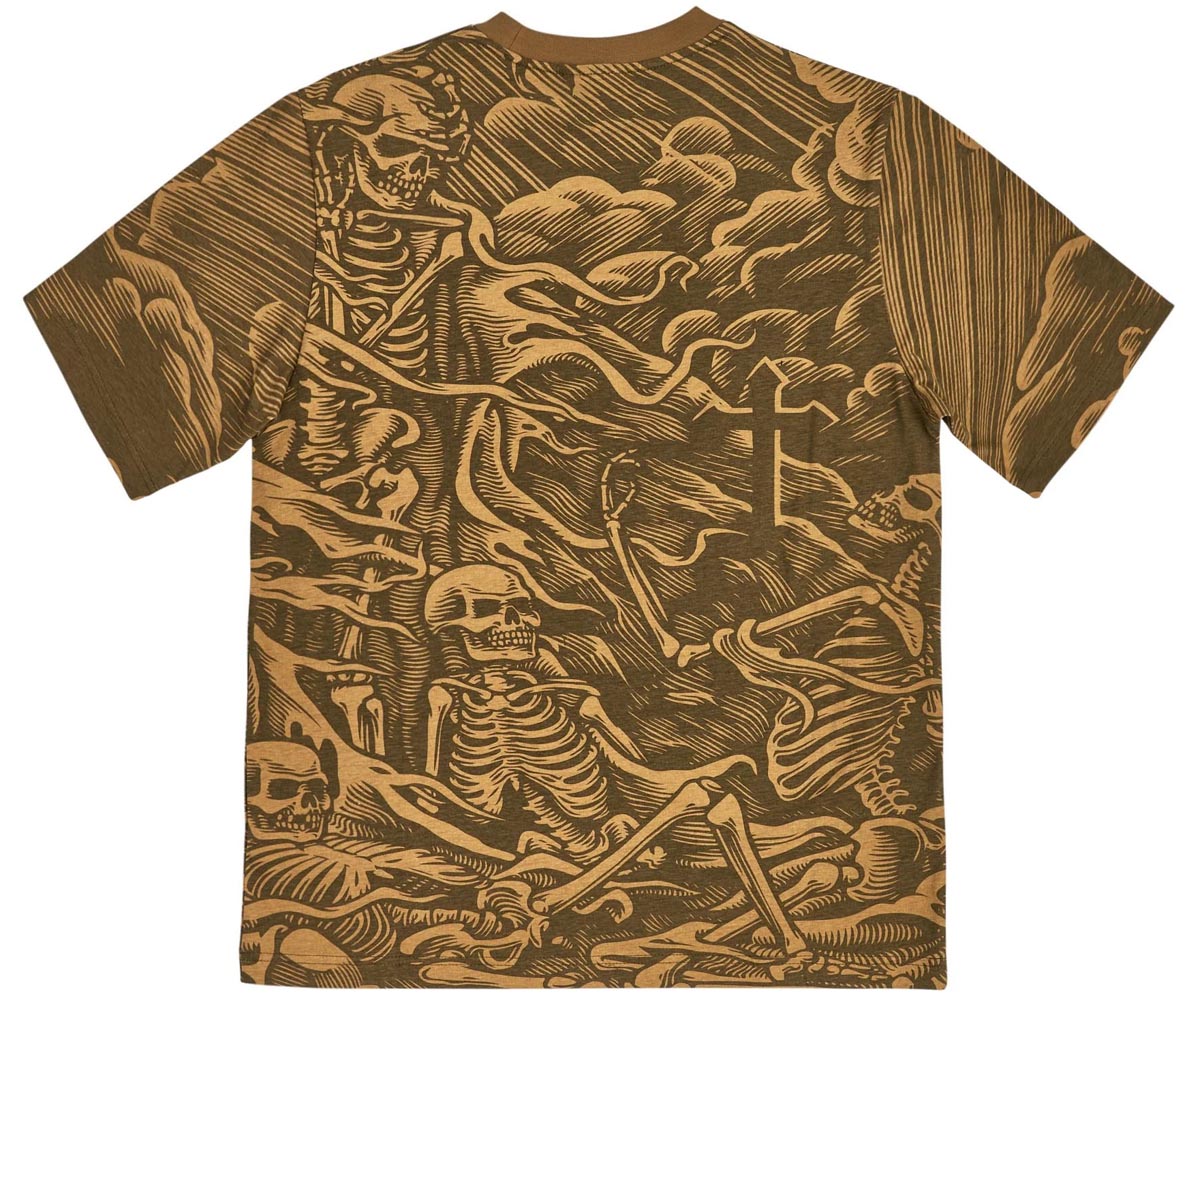 Santa Cruz OBrien Purgatory T-Shirt - Brass image 2